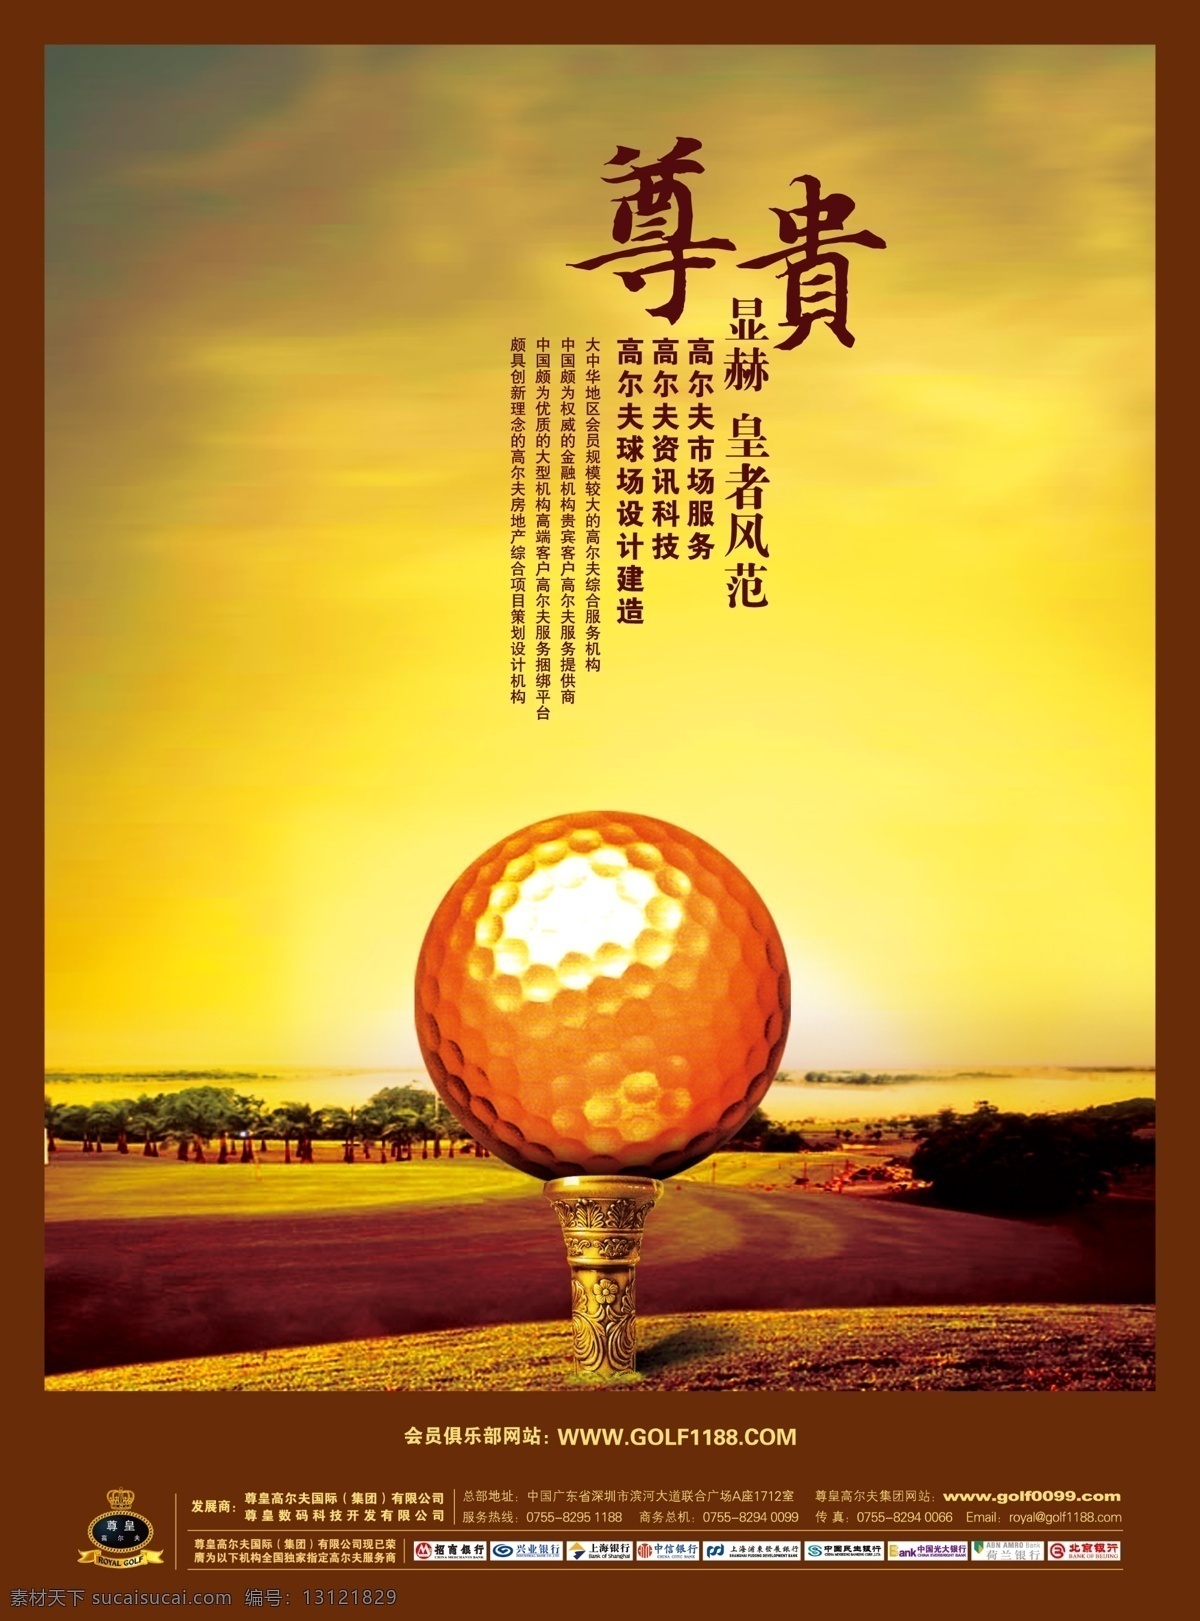 golf 高尔夫球 尊贵 金色 高贵 球场 黄昏 球t 形象 视野 广告设计模板 国内广告设计 源文件库